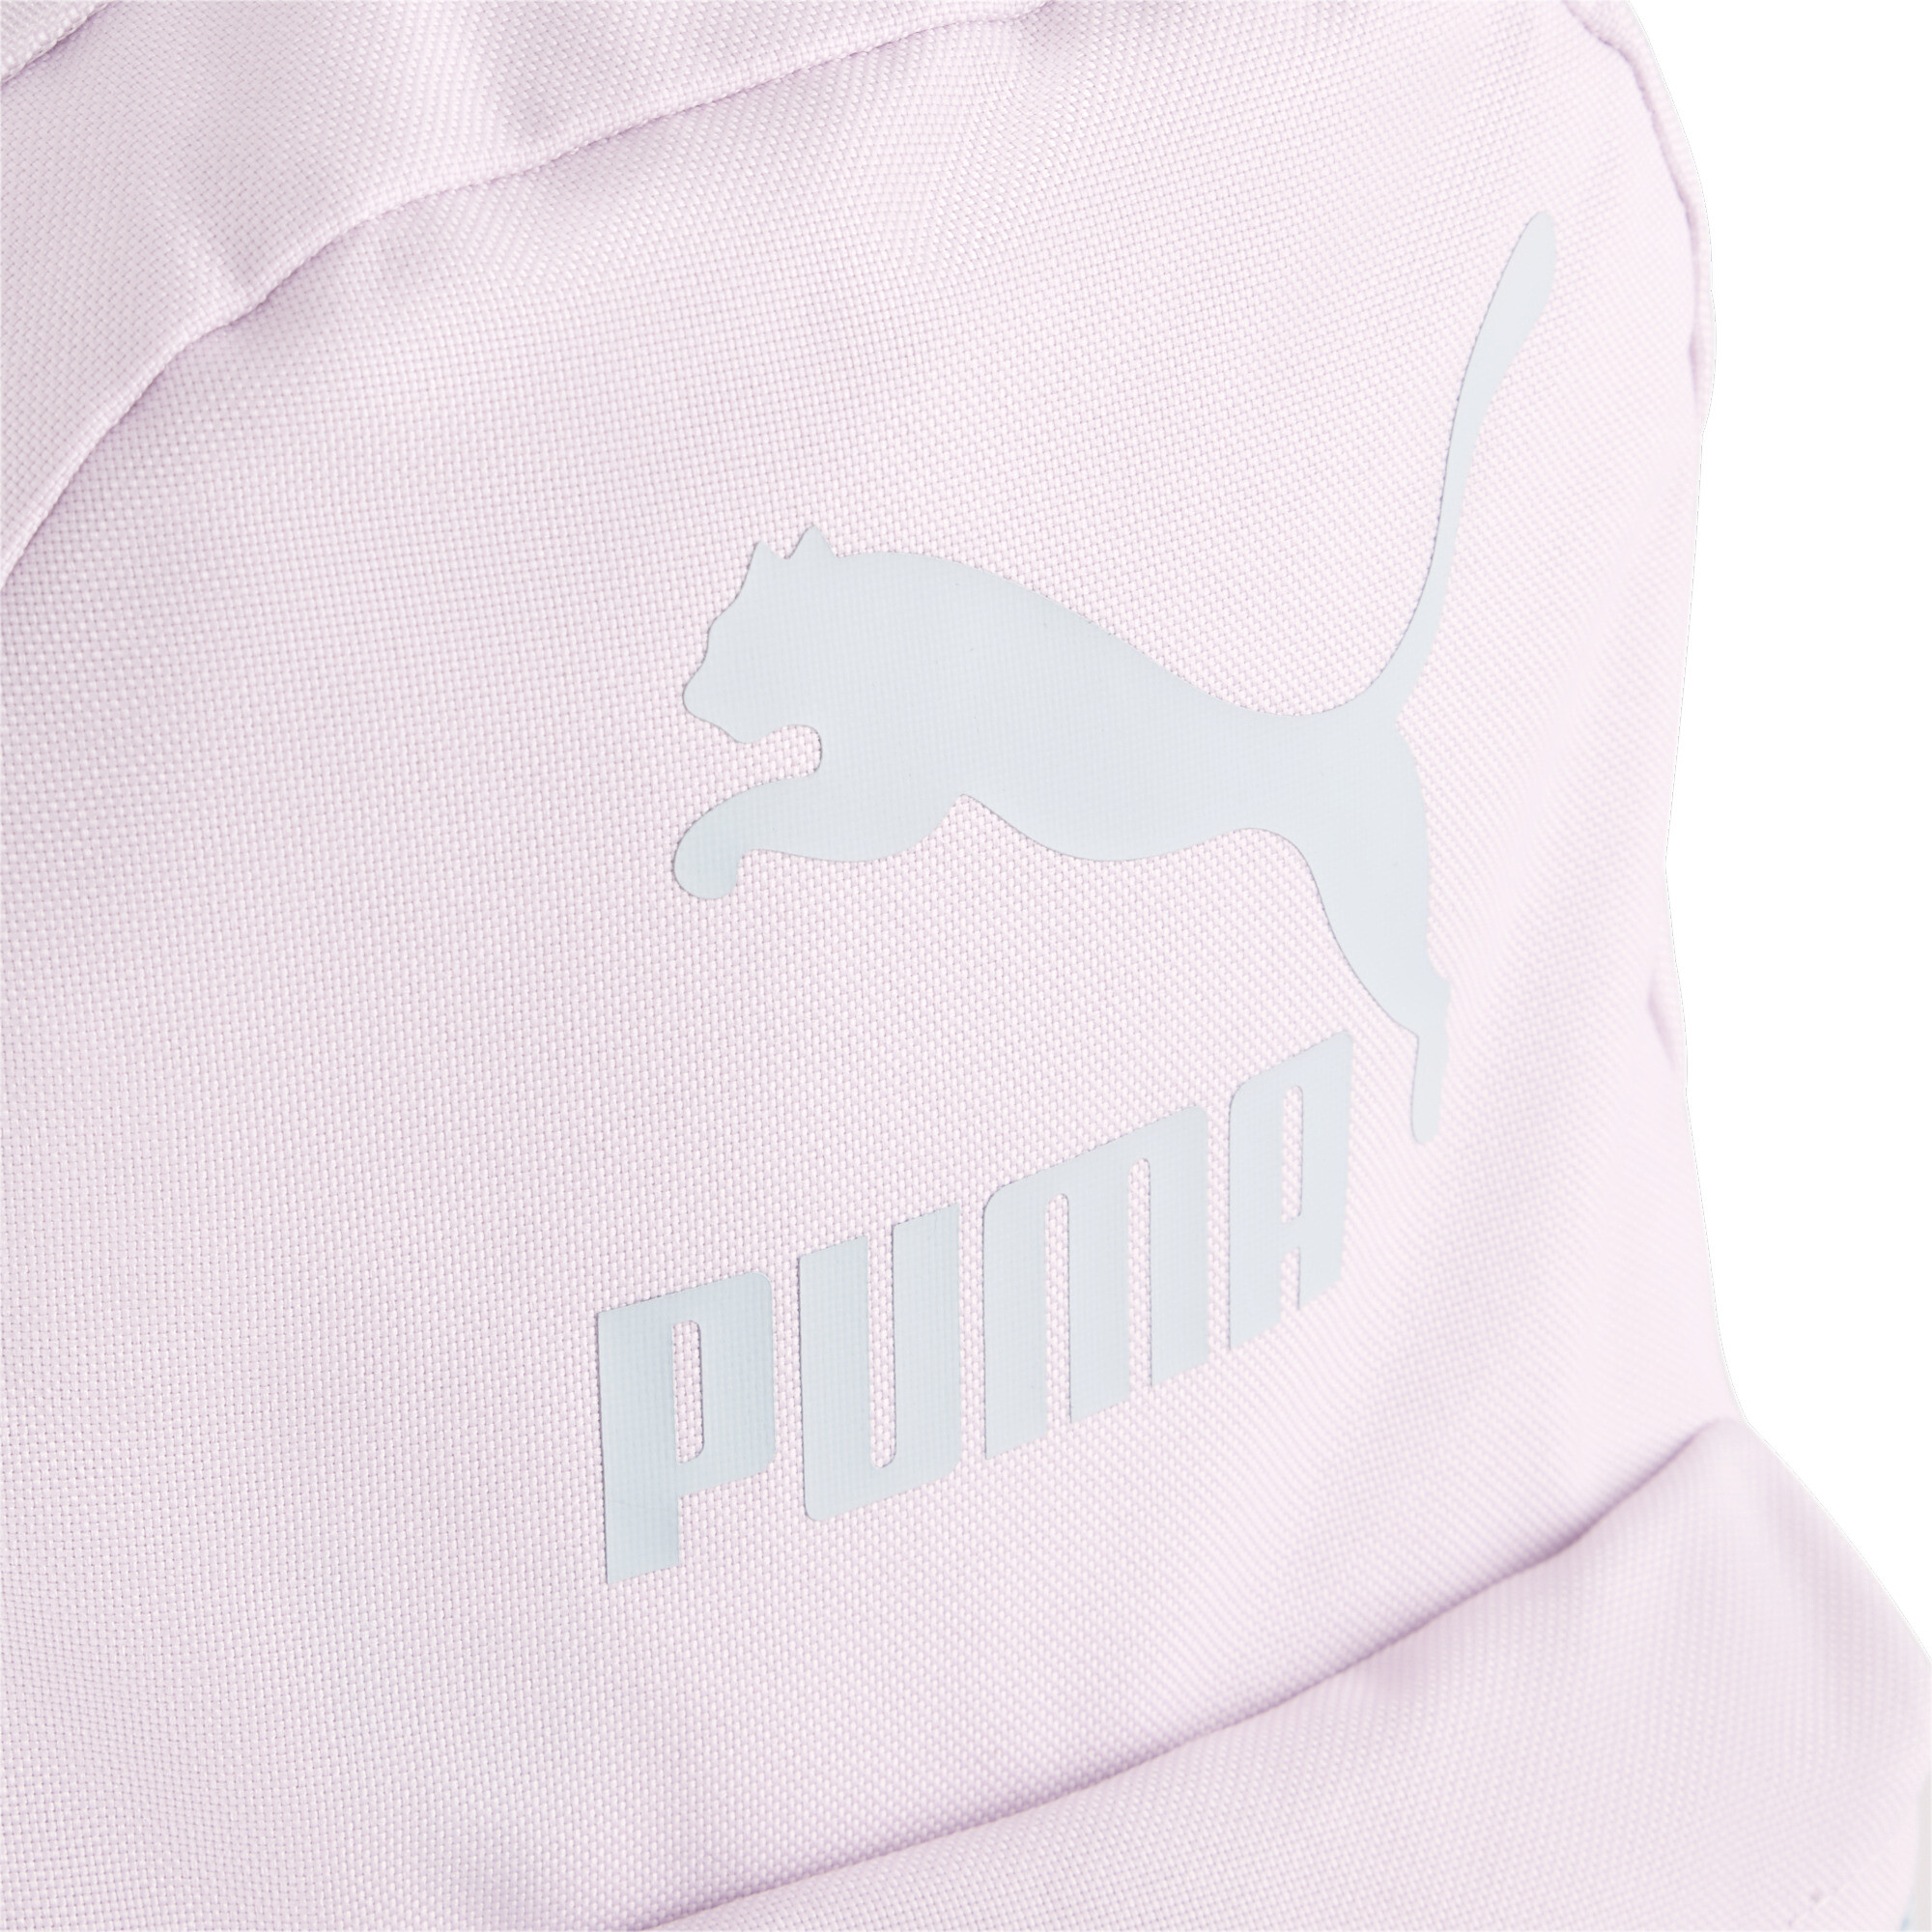 Puma Classics Archive Small Backpack, Purple, Accessories